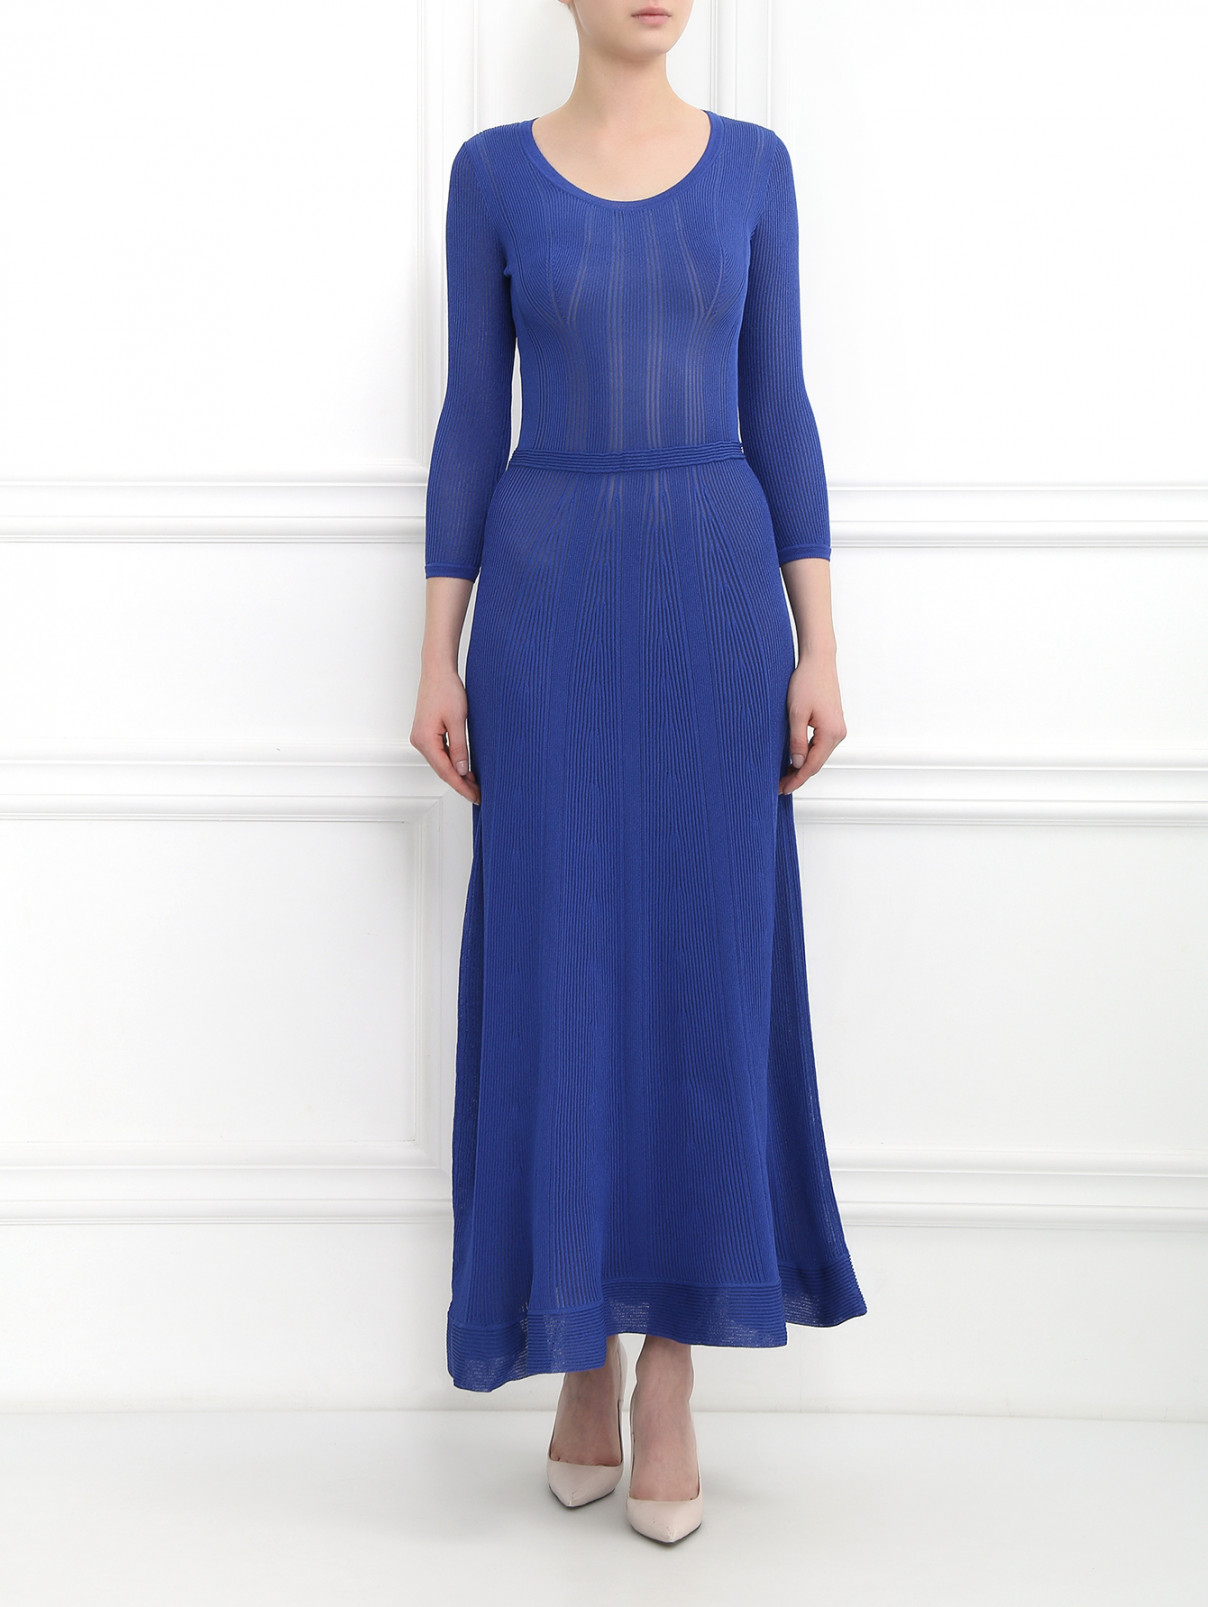 Трикотажное платье-макси с рукавами 3/4 Alberta Ferretti  –  Модель Общий вид  – Цвет:  Синий